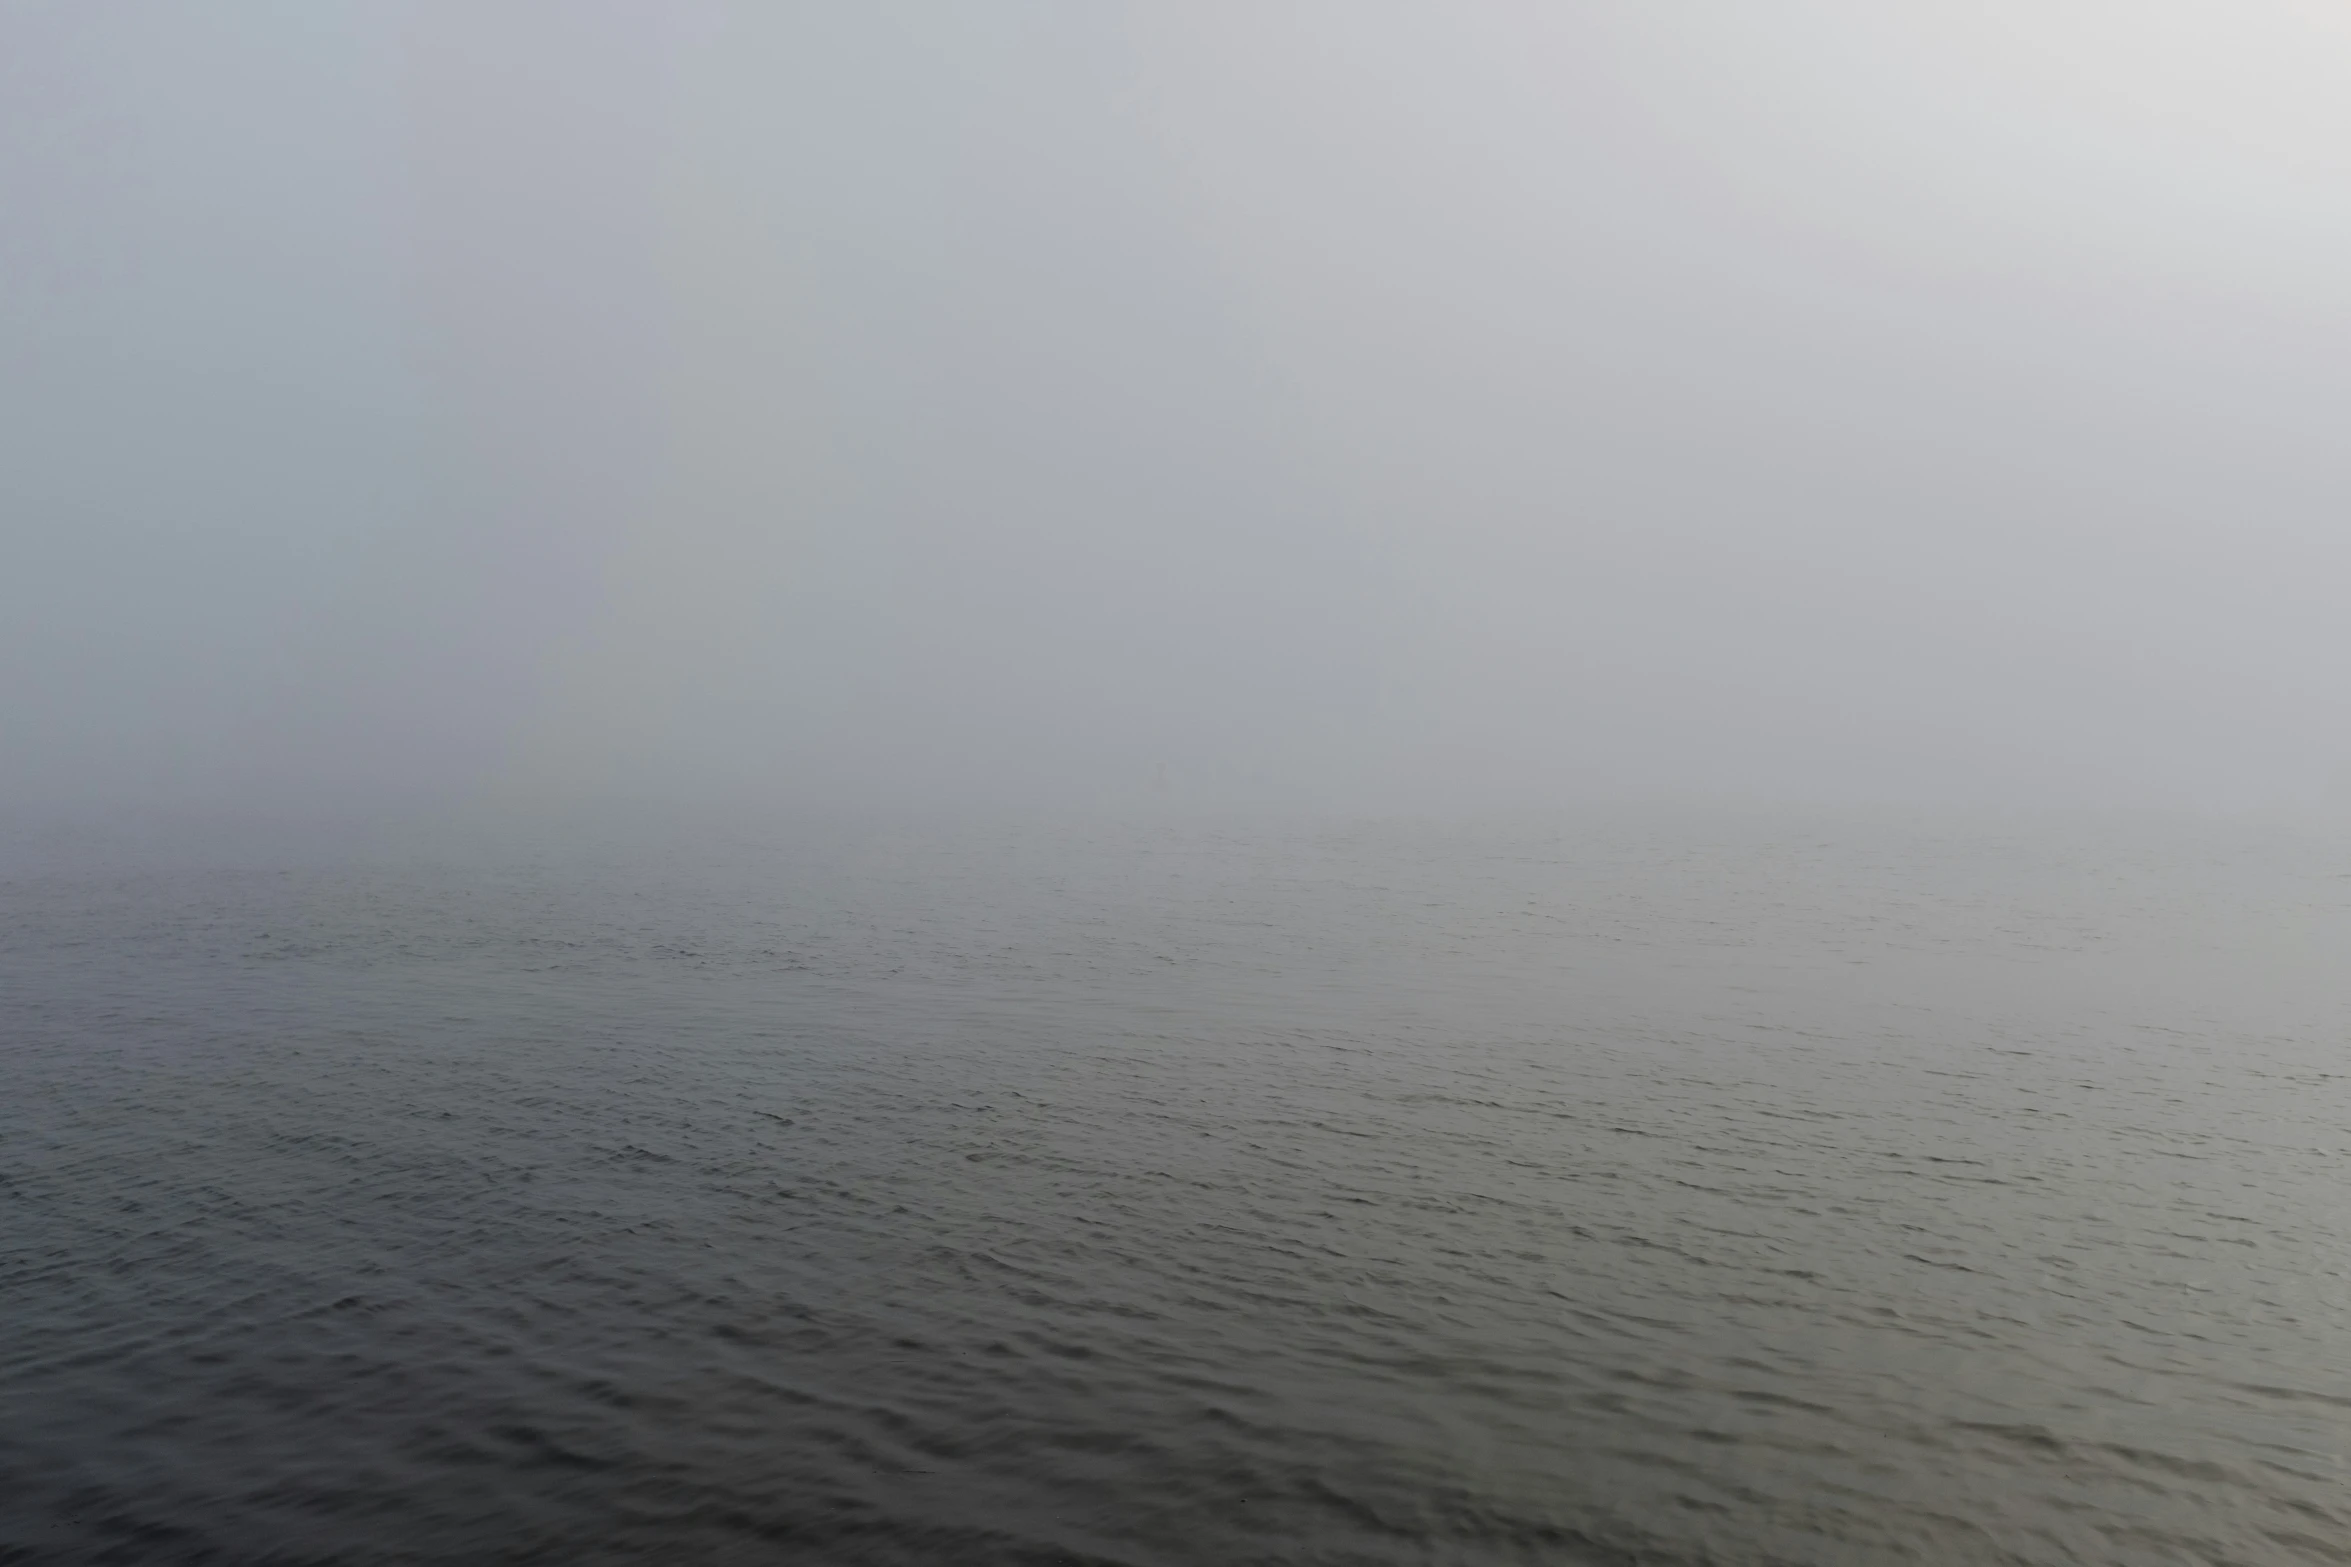 lone sail boat on open ocean in foggy weather